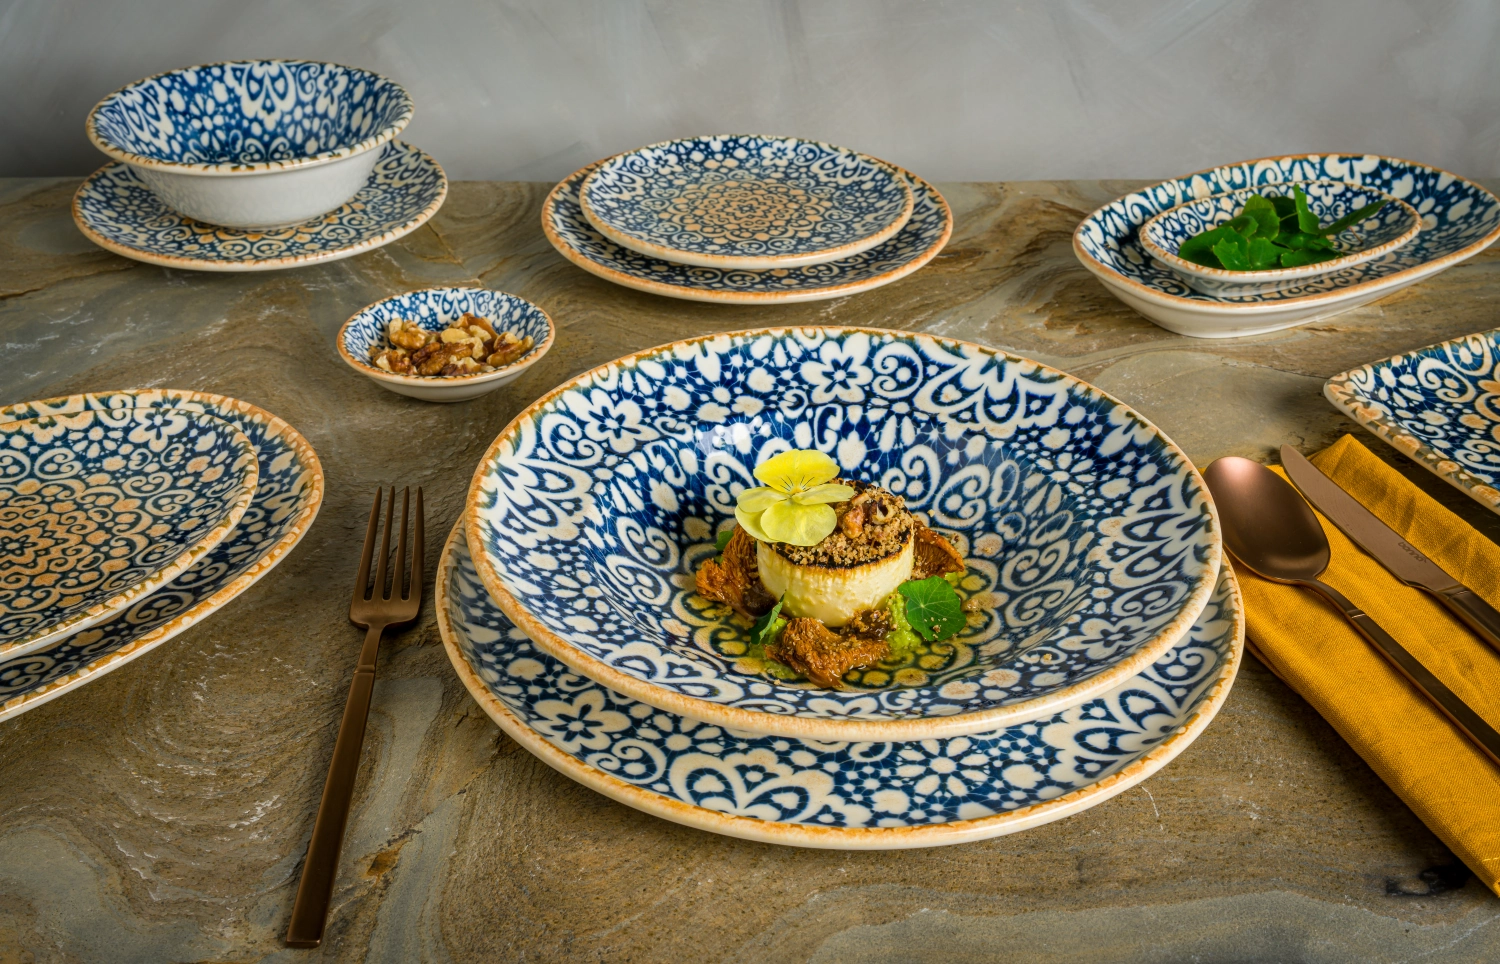 Alhambra gourmet assiette plate 32 cm